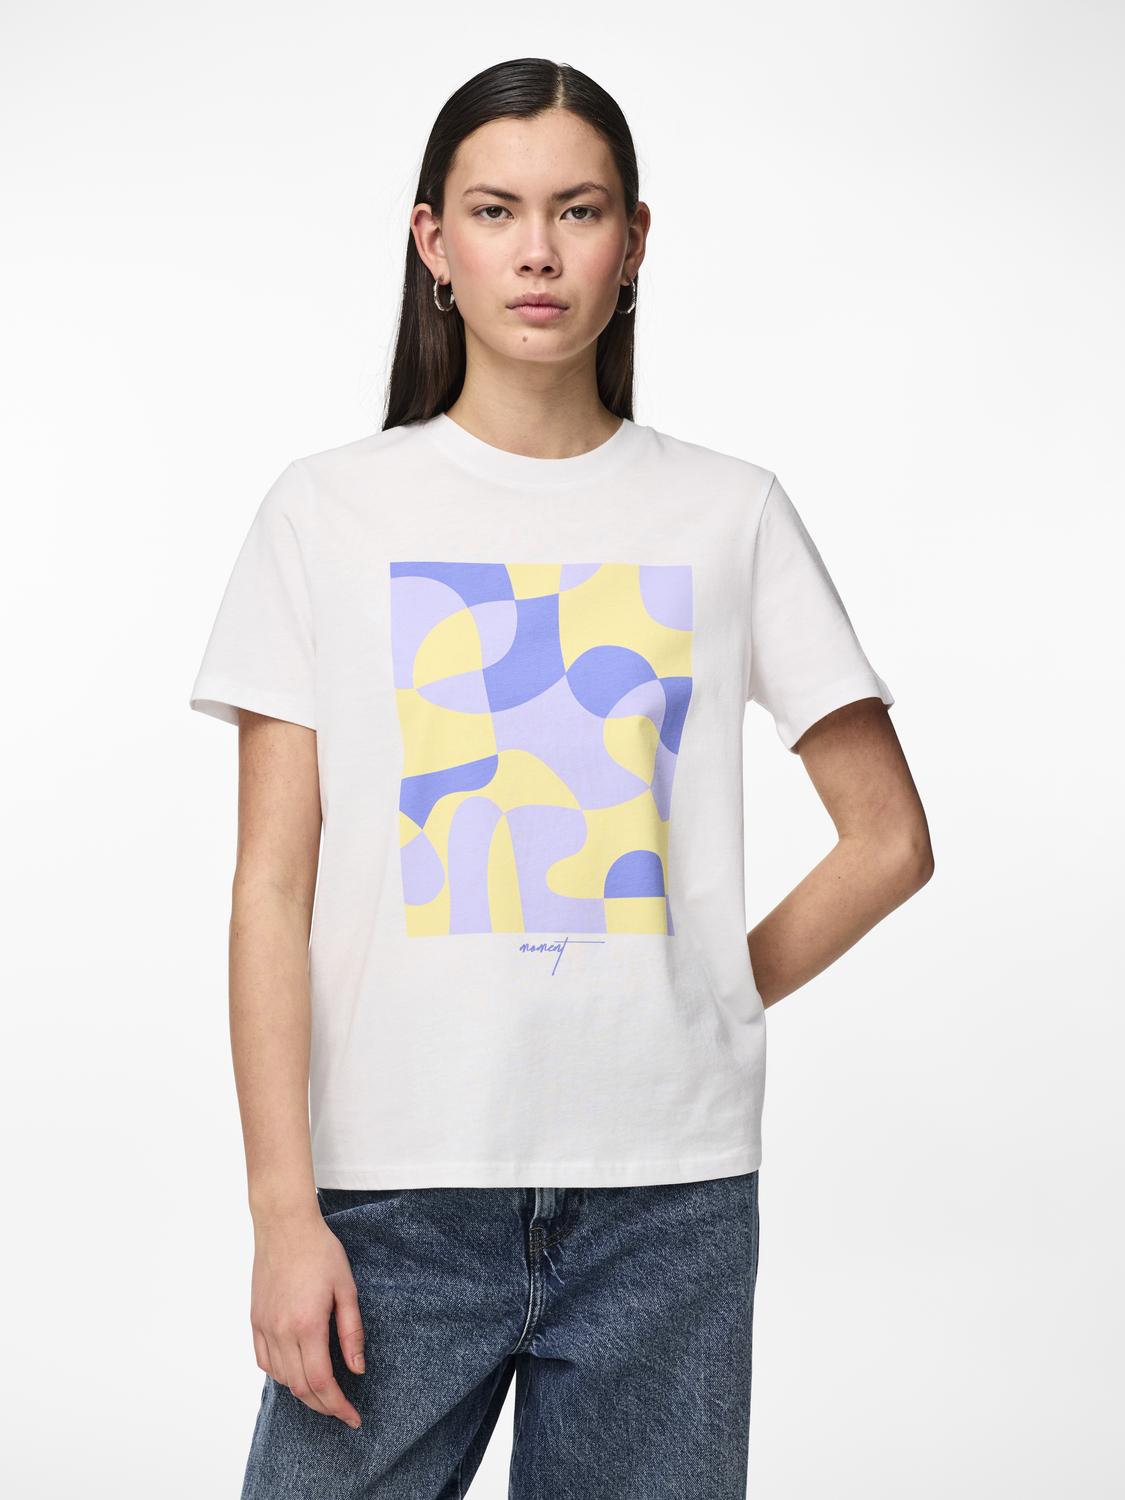 Kaitlyn T-Shirt (Bright White/Lavender)